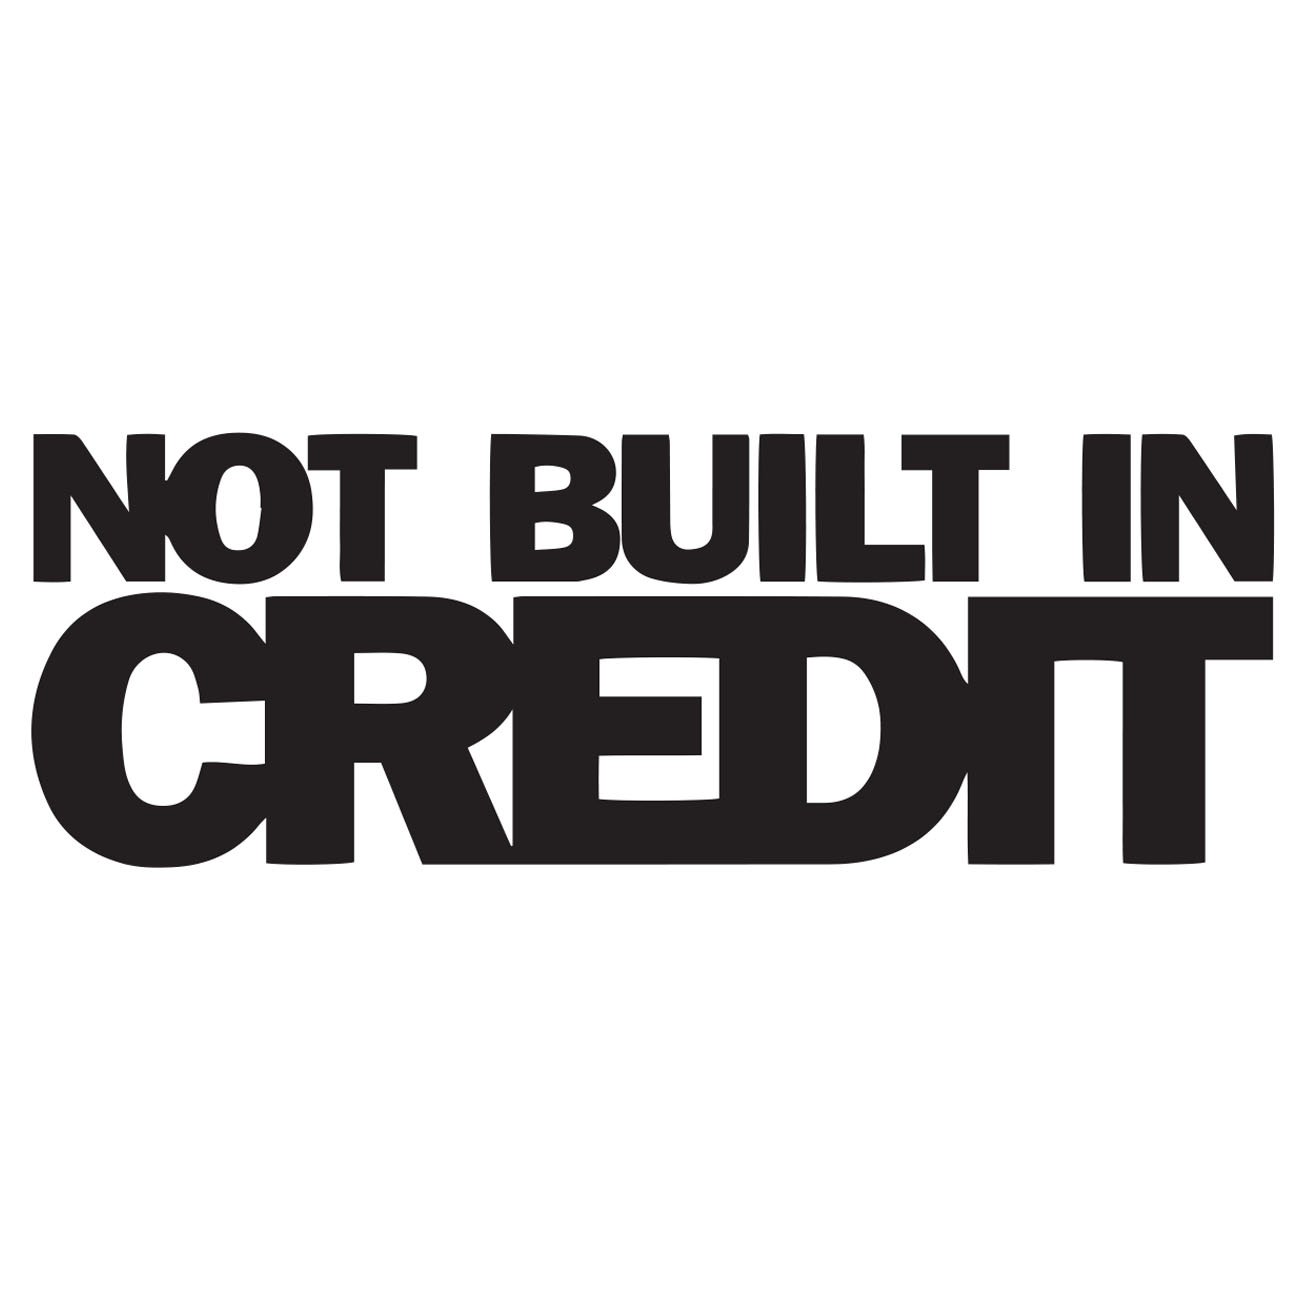 Not built in credit